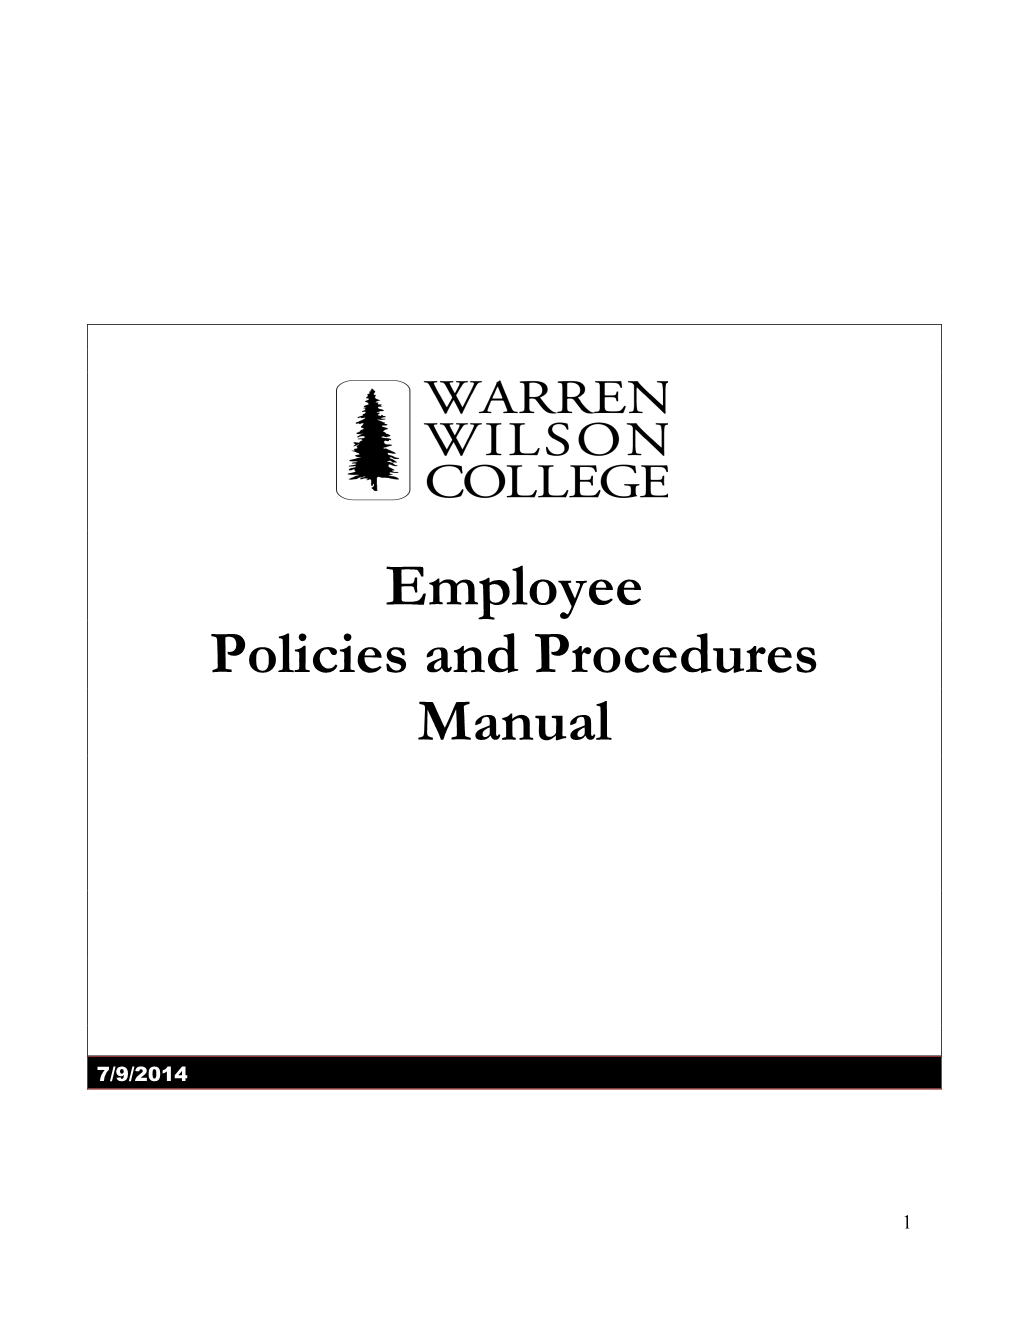 Employee Policies and Procedures Manual